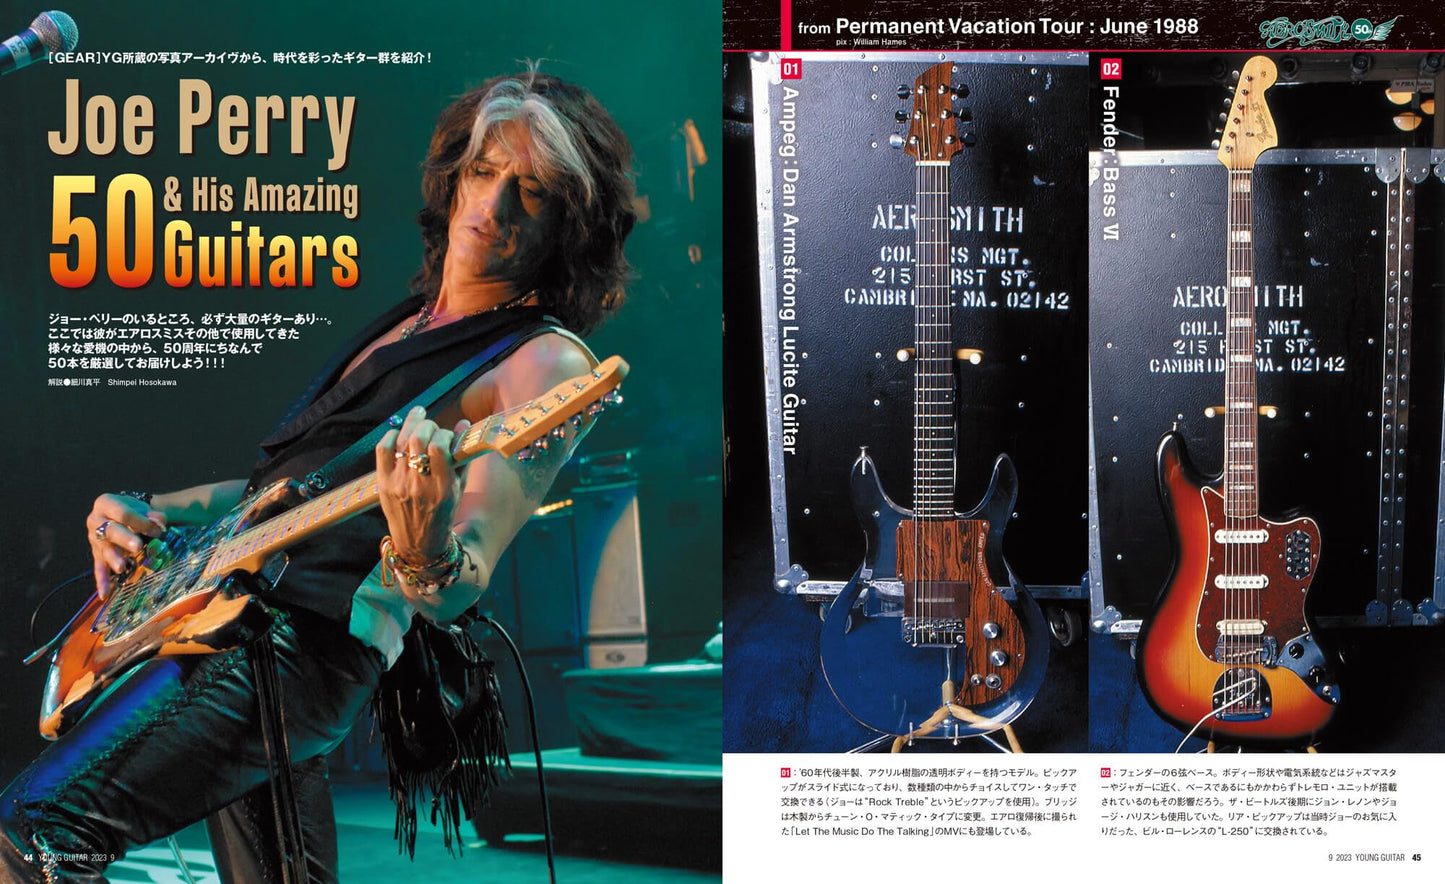 Young Guitar Magazine September 2023